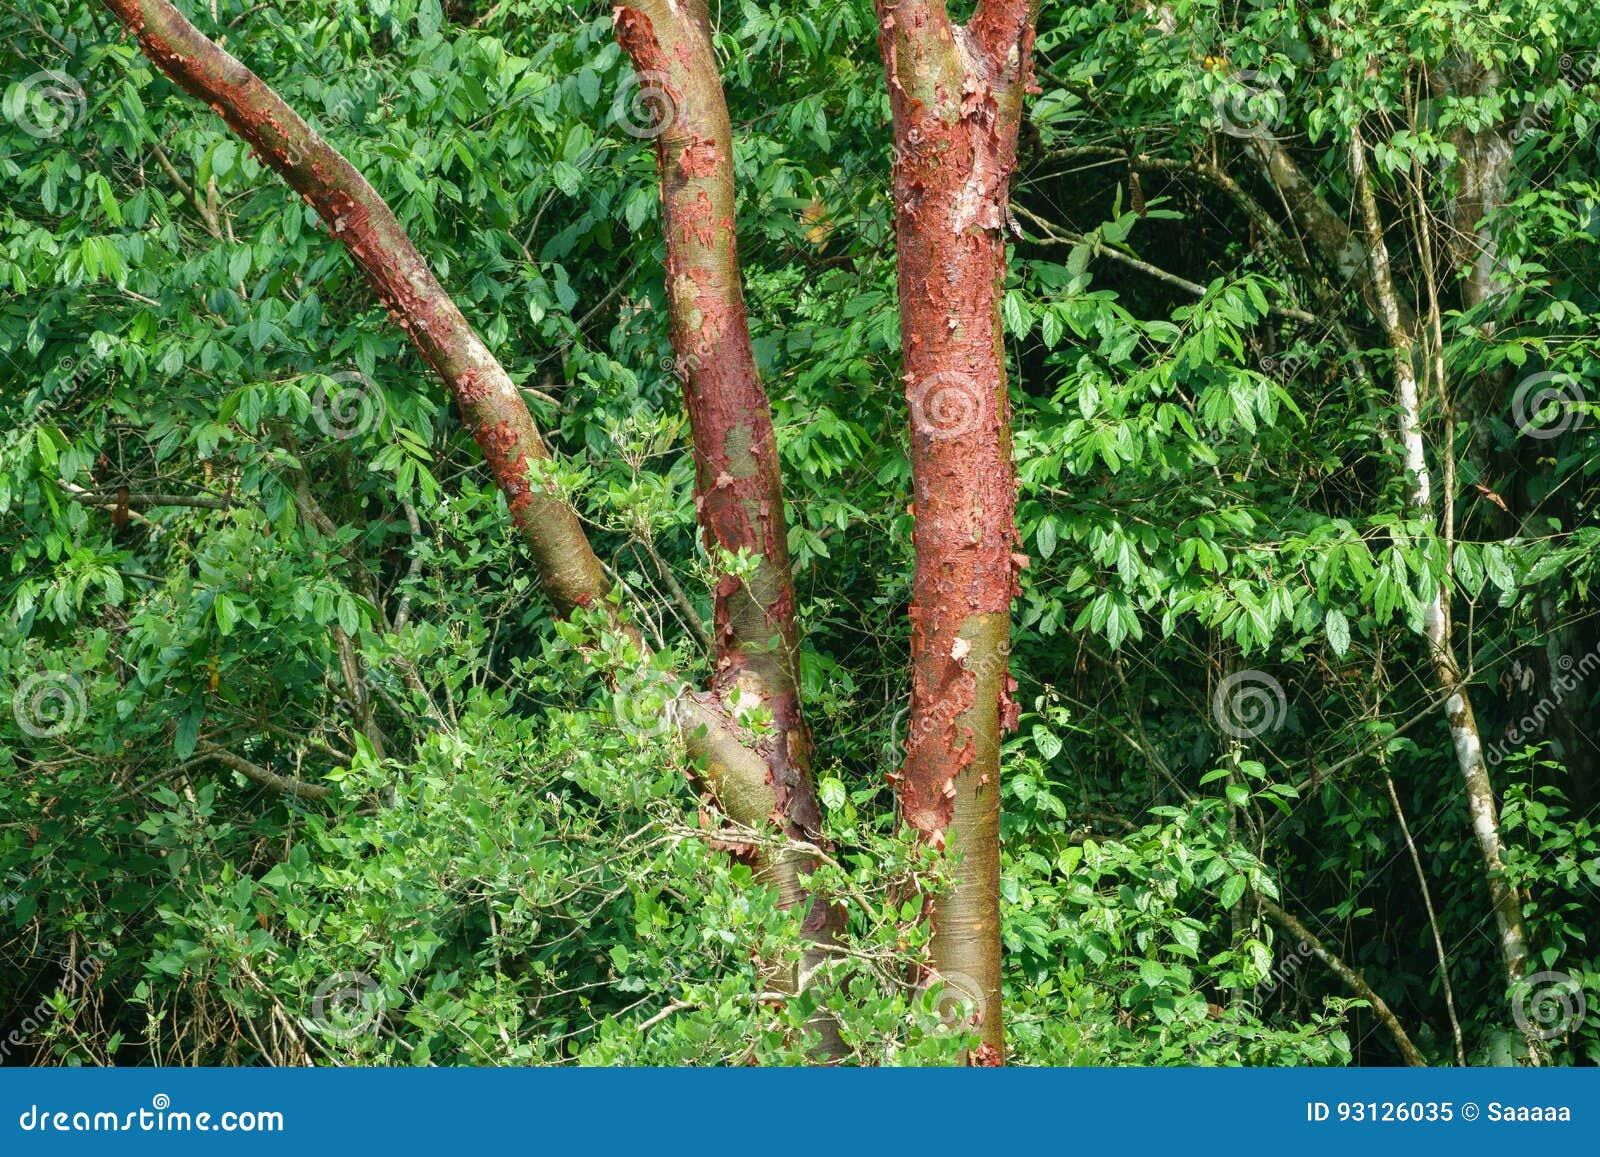 peeling bark of the bursera simaruba tree